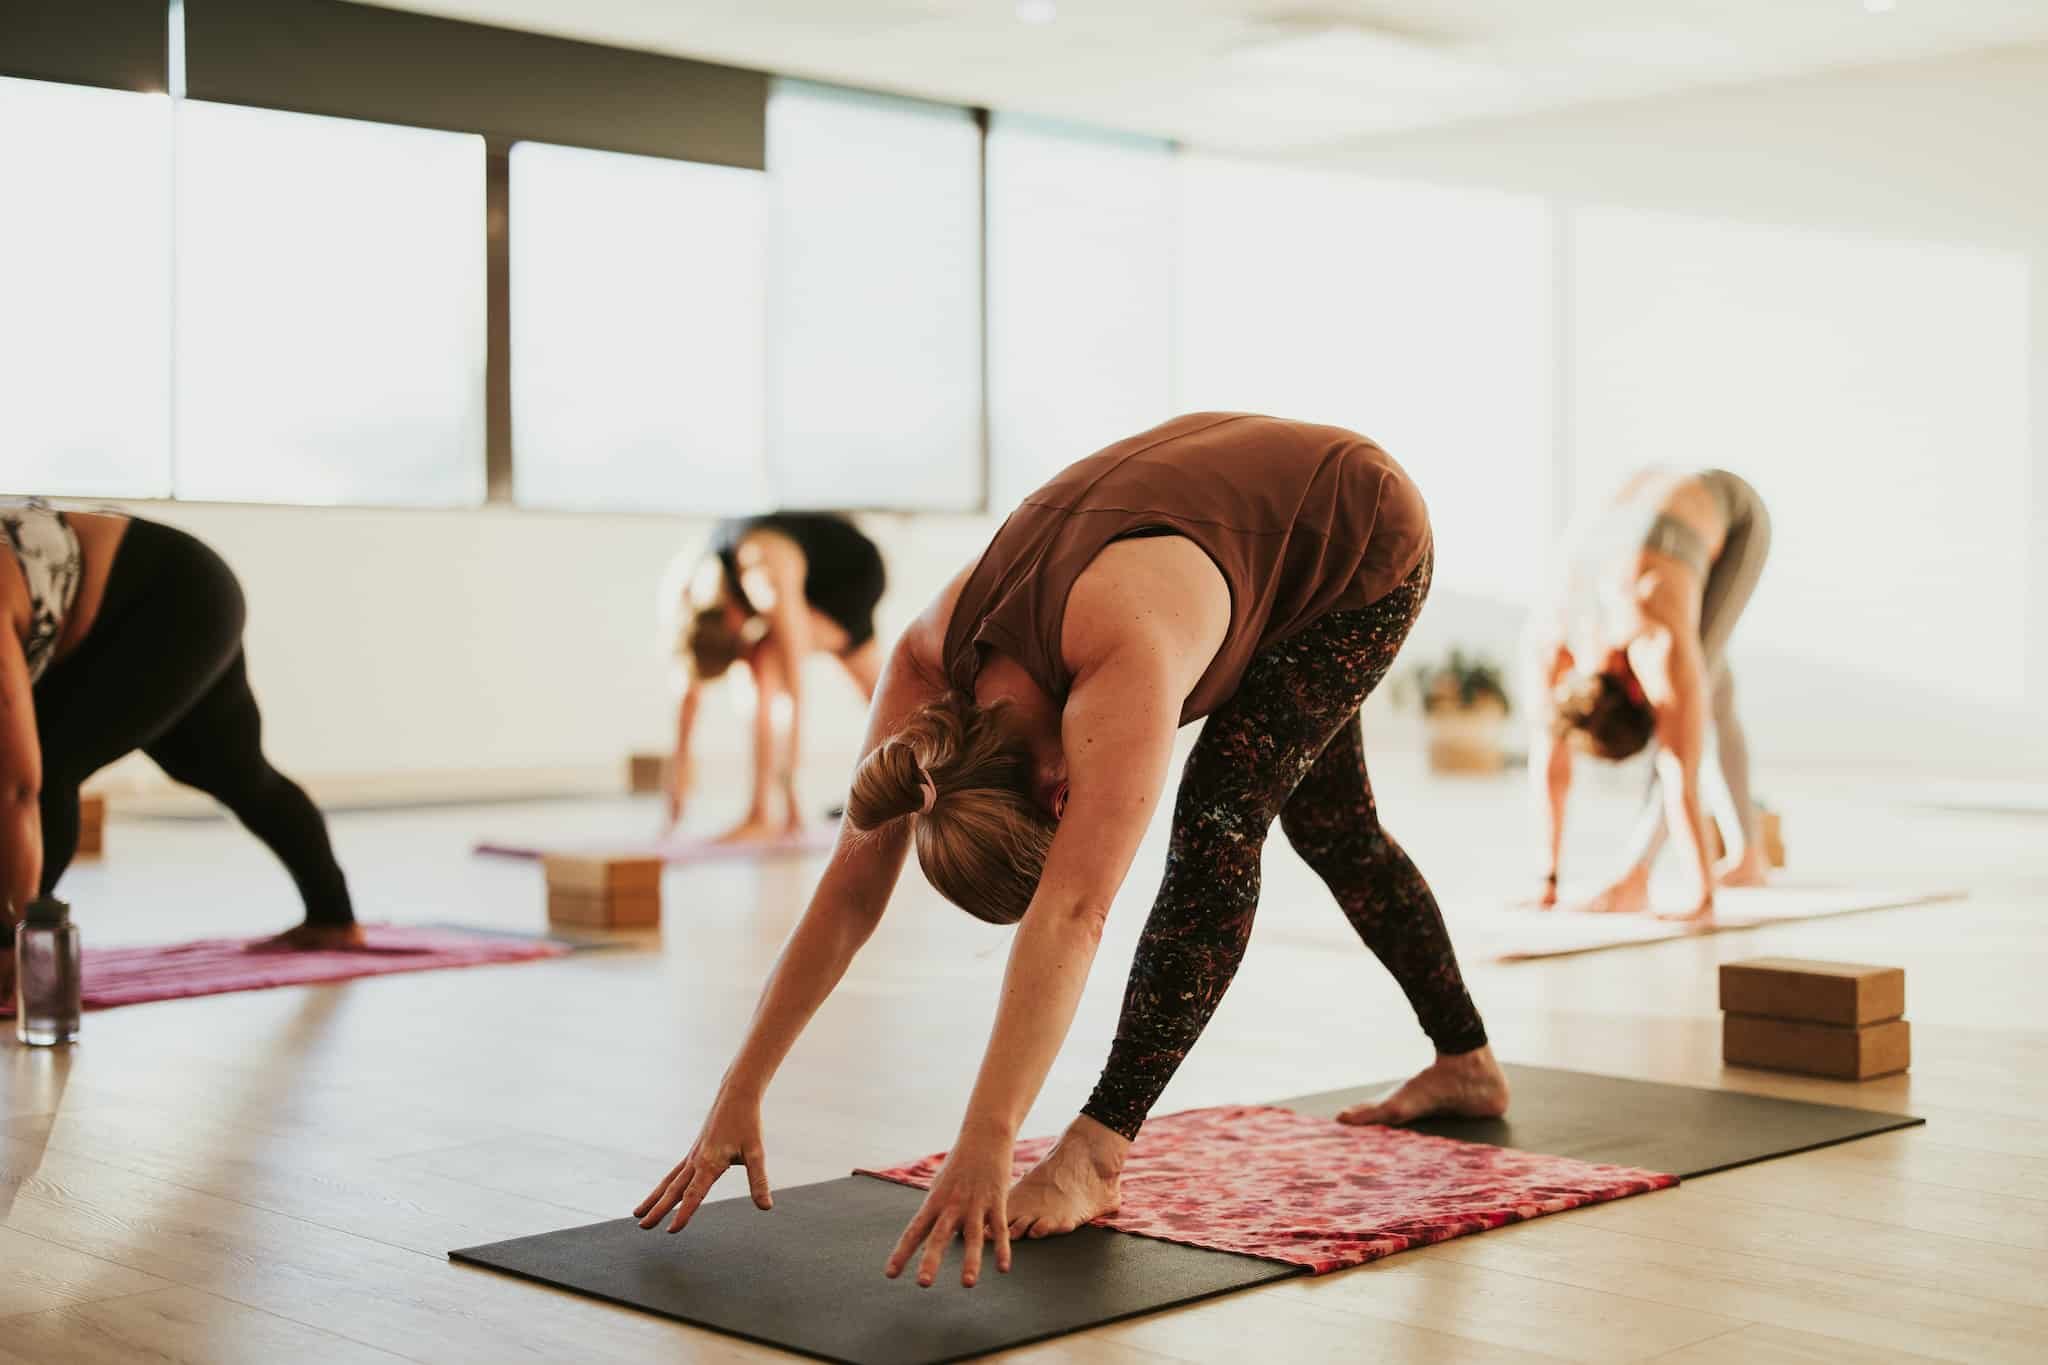 What is Bikram Yoga, What are its Benefits? - I FASTIN